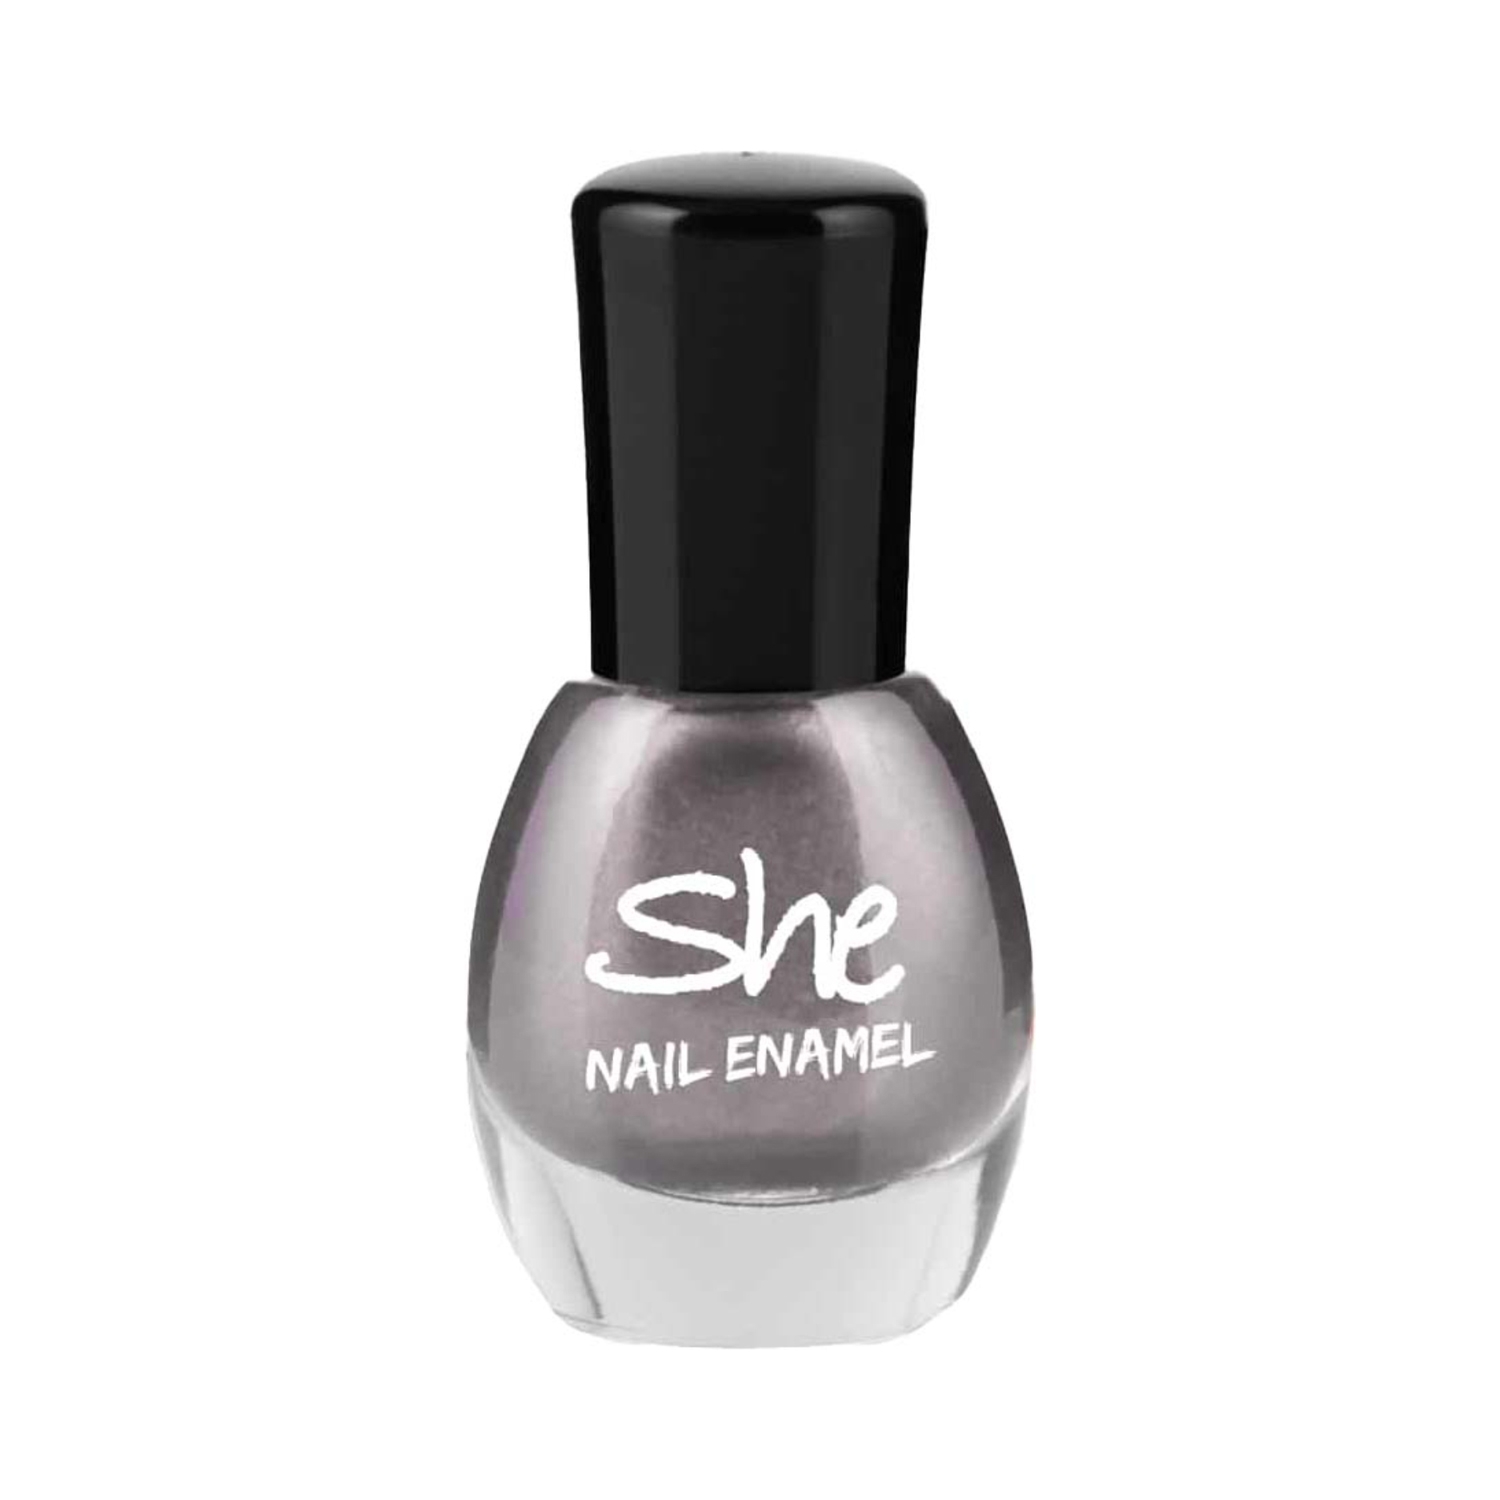 She | She Makeup Nail Enamel - 301 Shimmery Lilac (8ml)